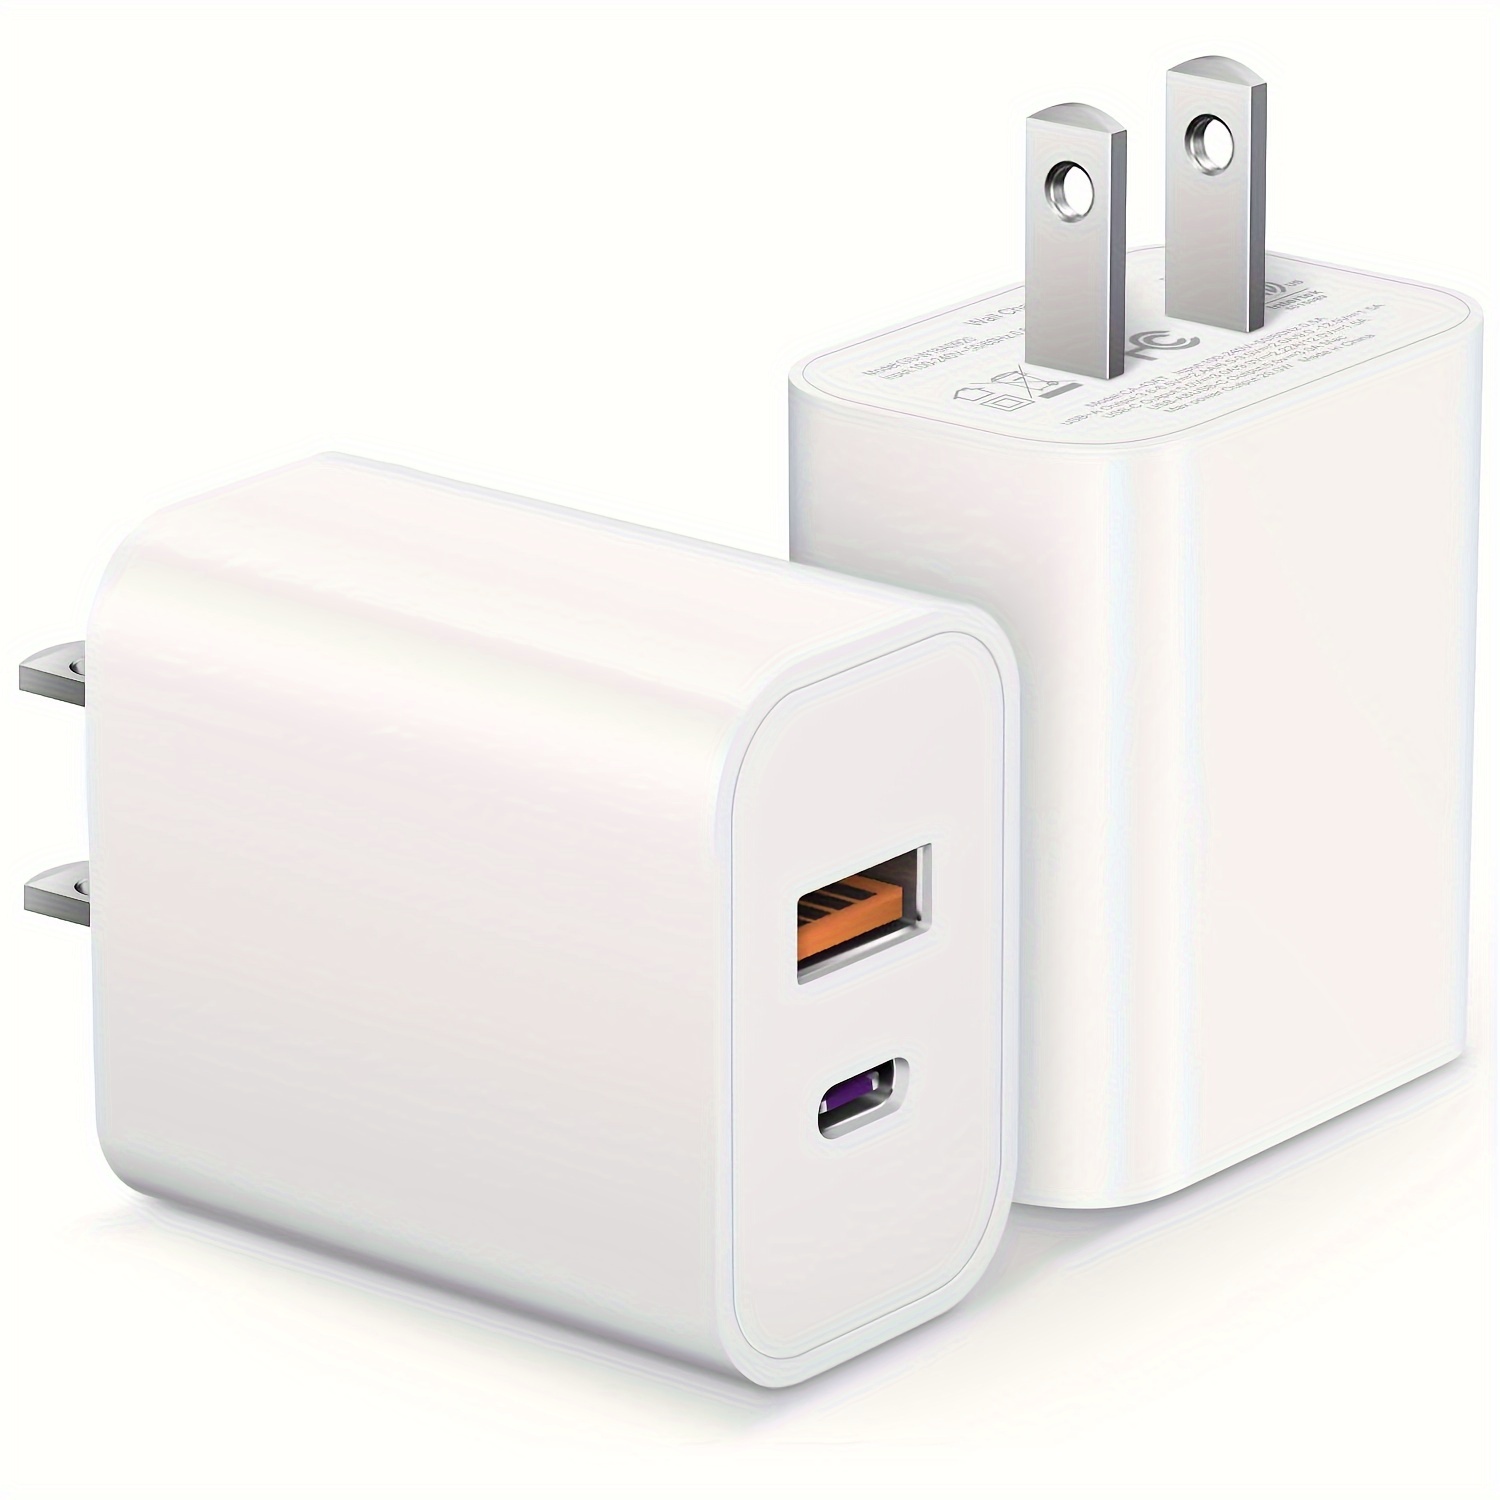 Enchufe USB, cargador de pared USB, paquete de 3 unidades, GiGreen de doble  puerto USB enchufe eléctrico cubo 5V 2.1A bloque de carga USB enchufes